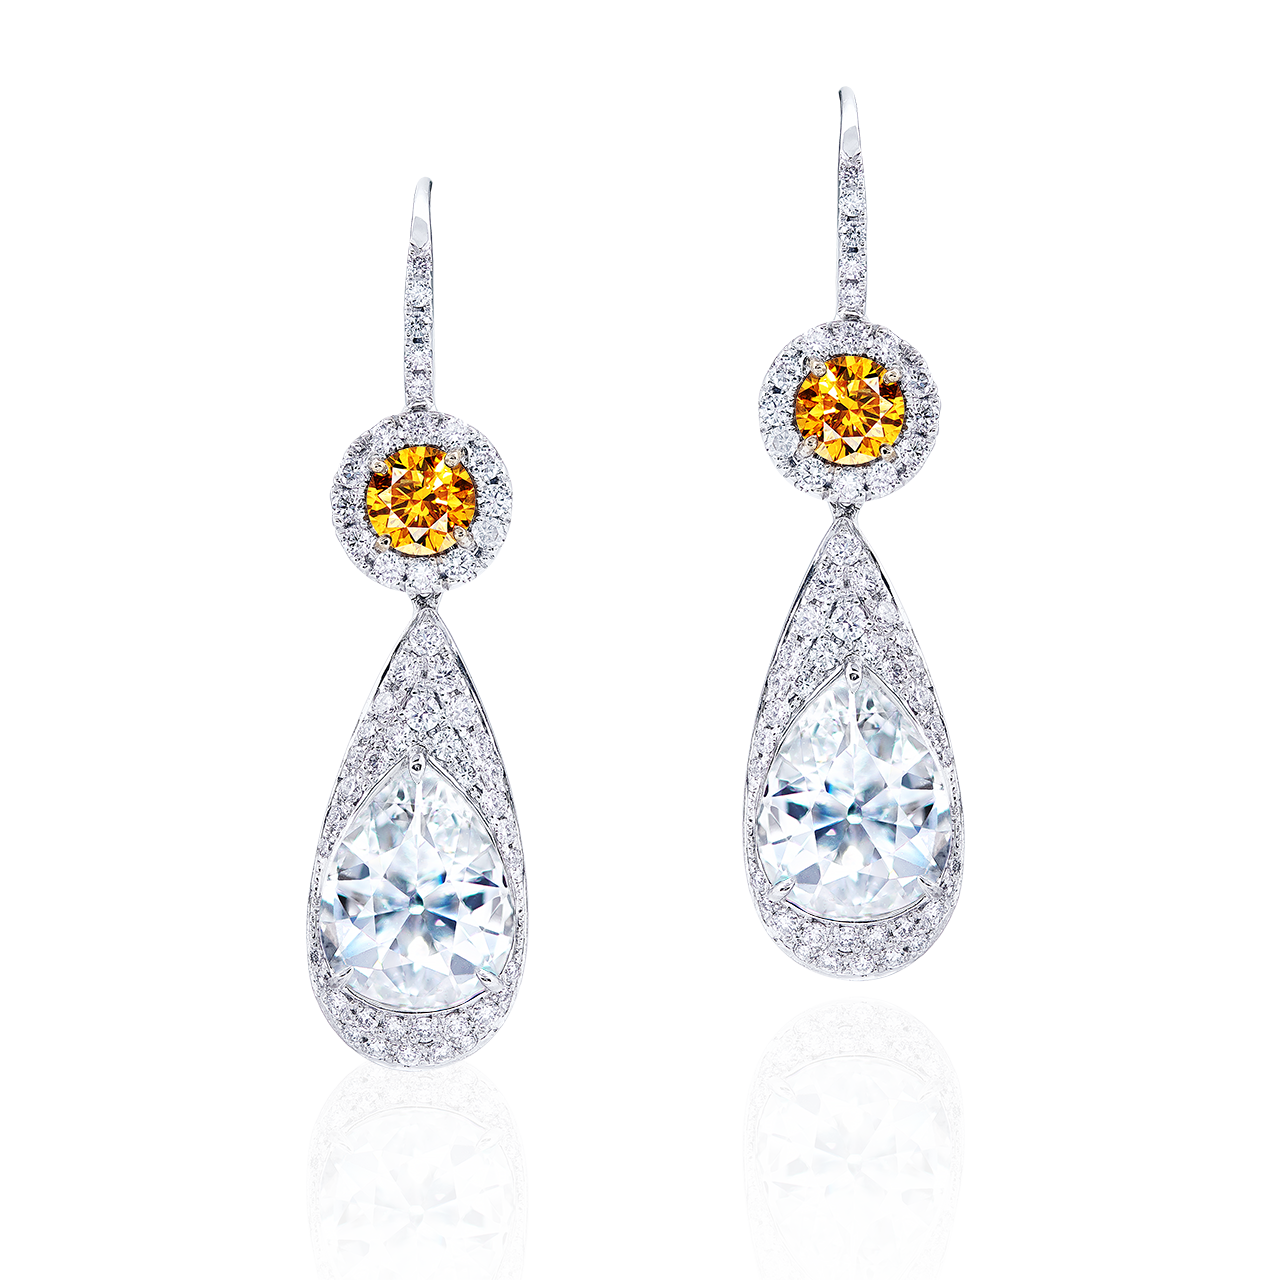 GIA 3.00克拉 白鑽耳環
Pair of Pear-shaped Diamond Earrings